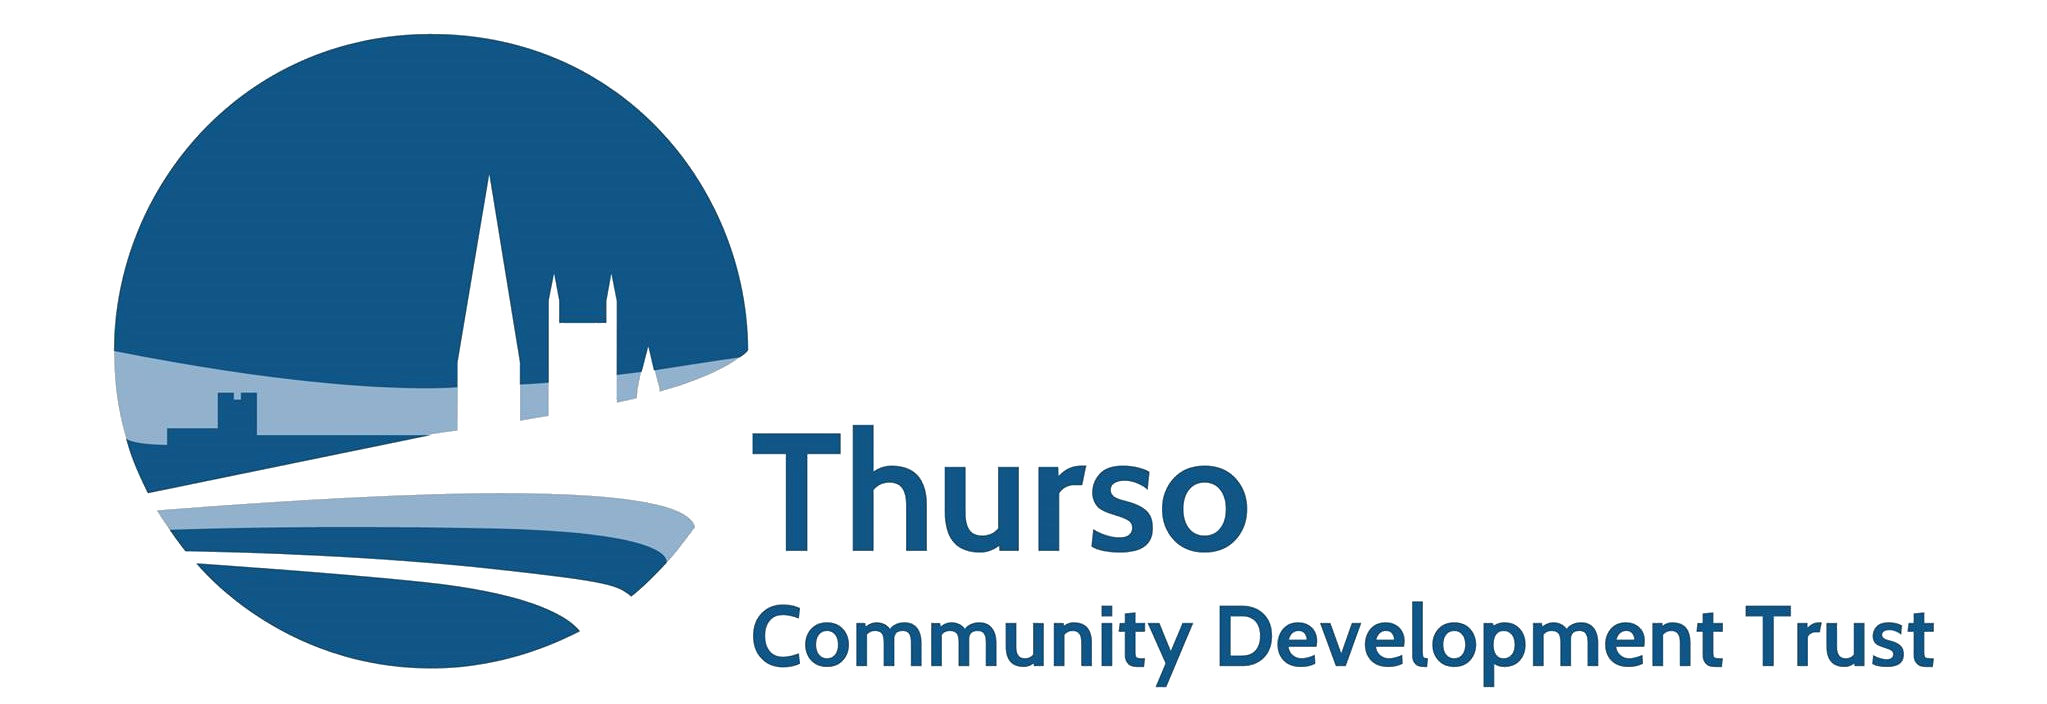 Thurso Community Development Trust - Logo